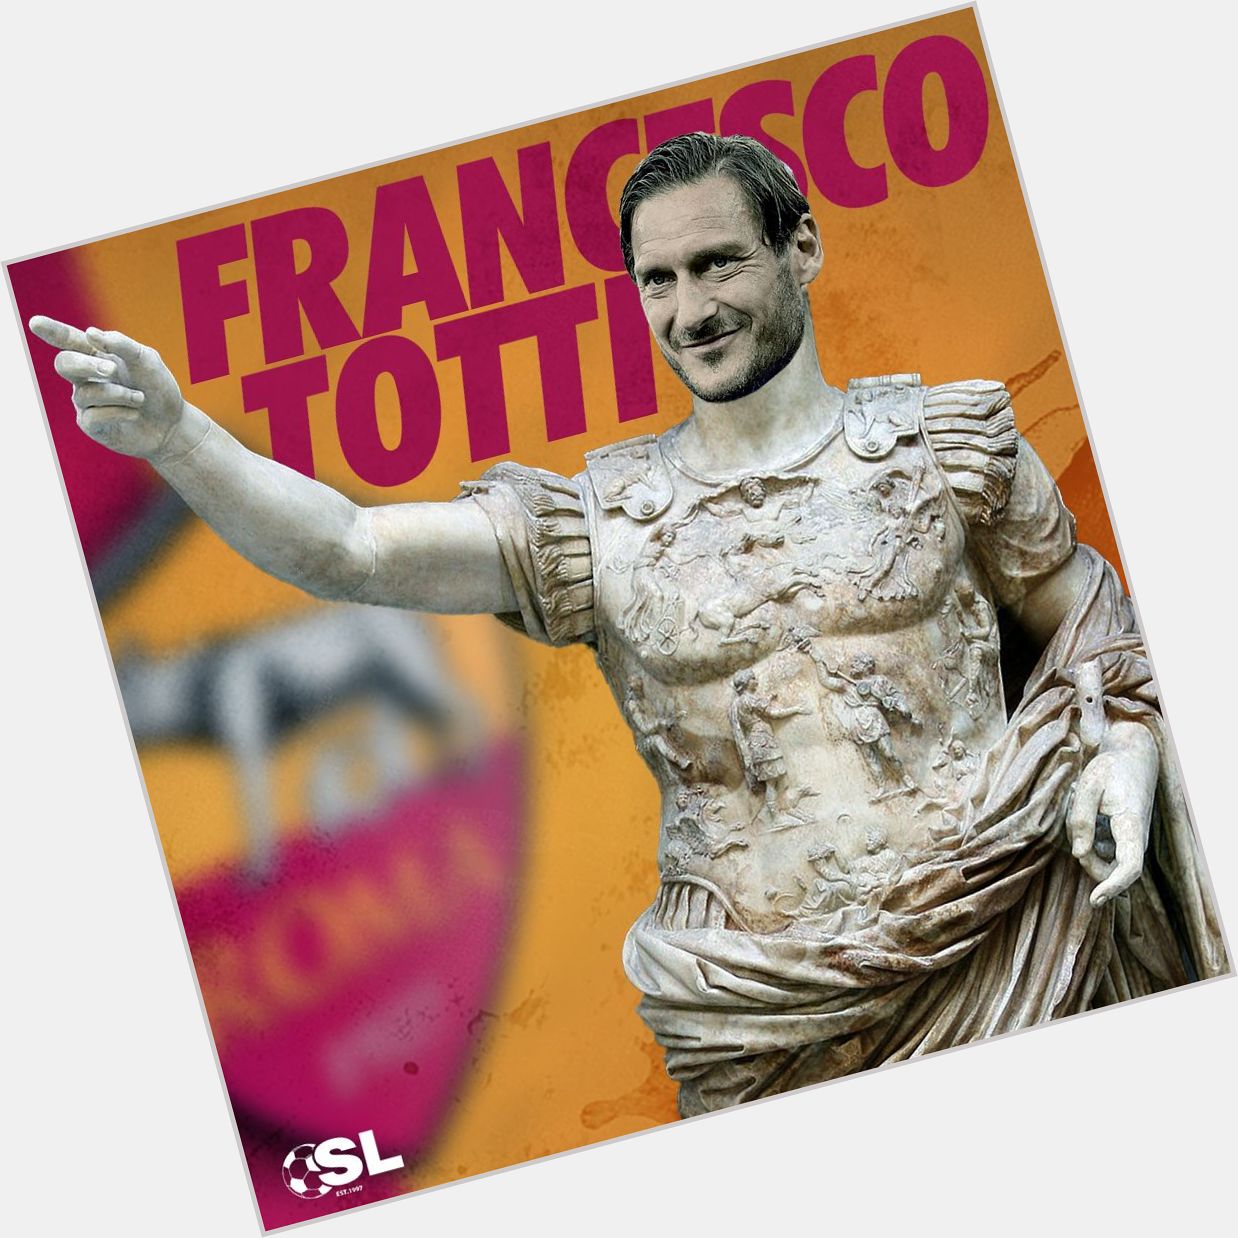 Happy Birthday to the real emperor of Rome, Francesco Totti! 